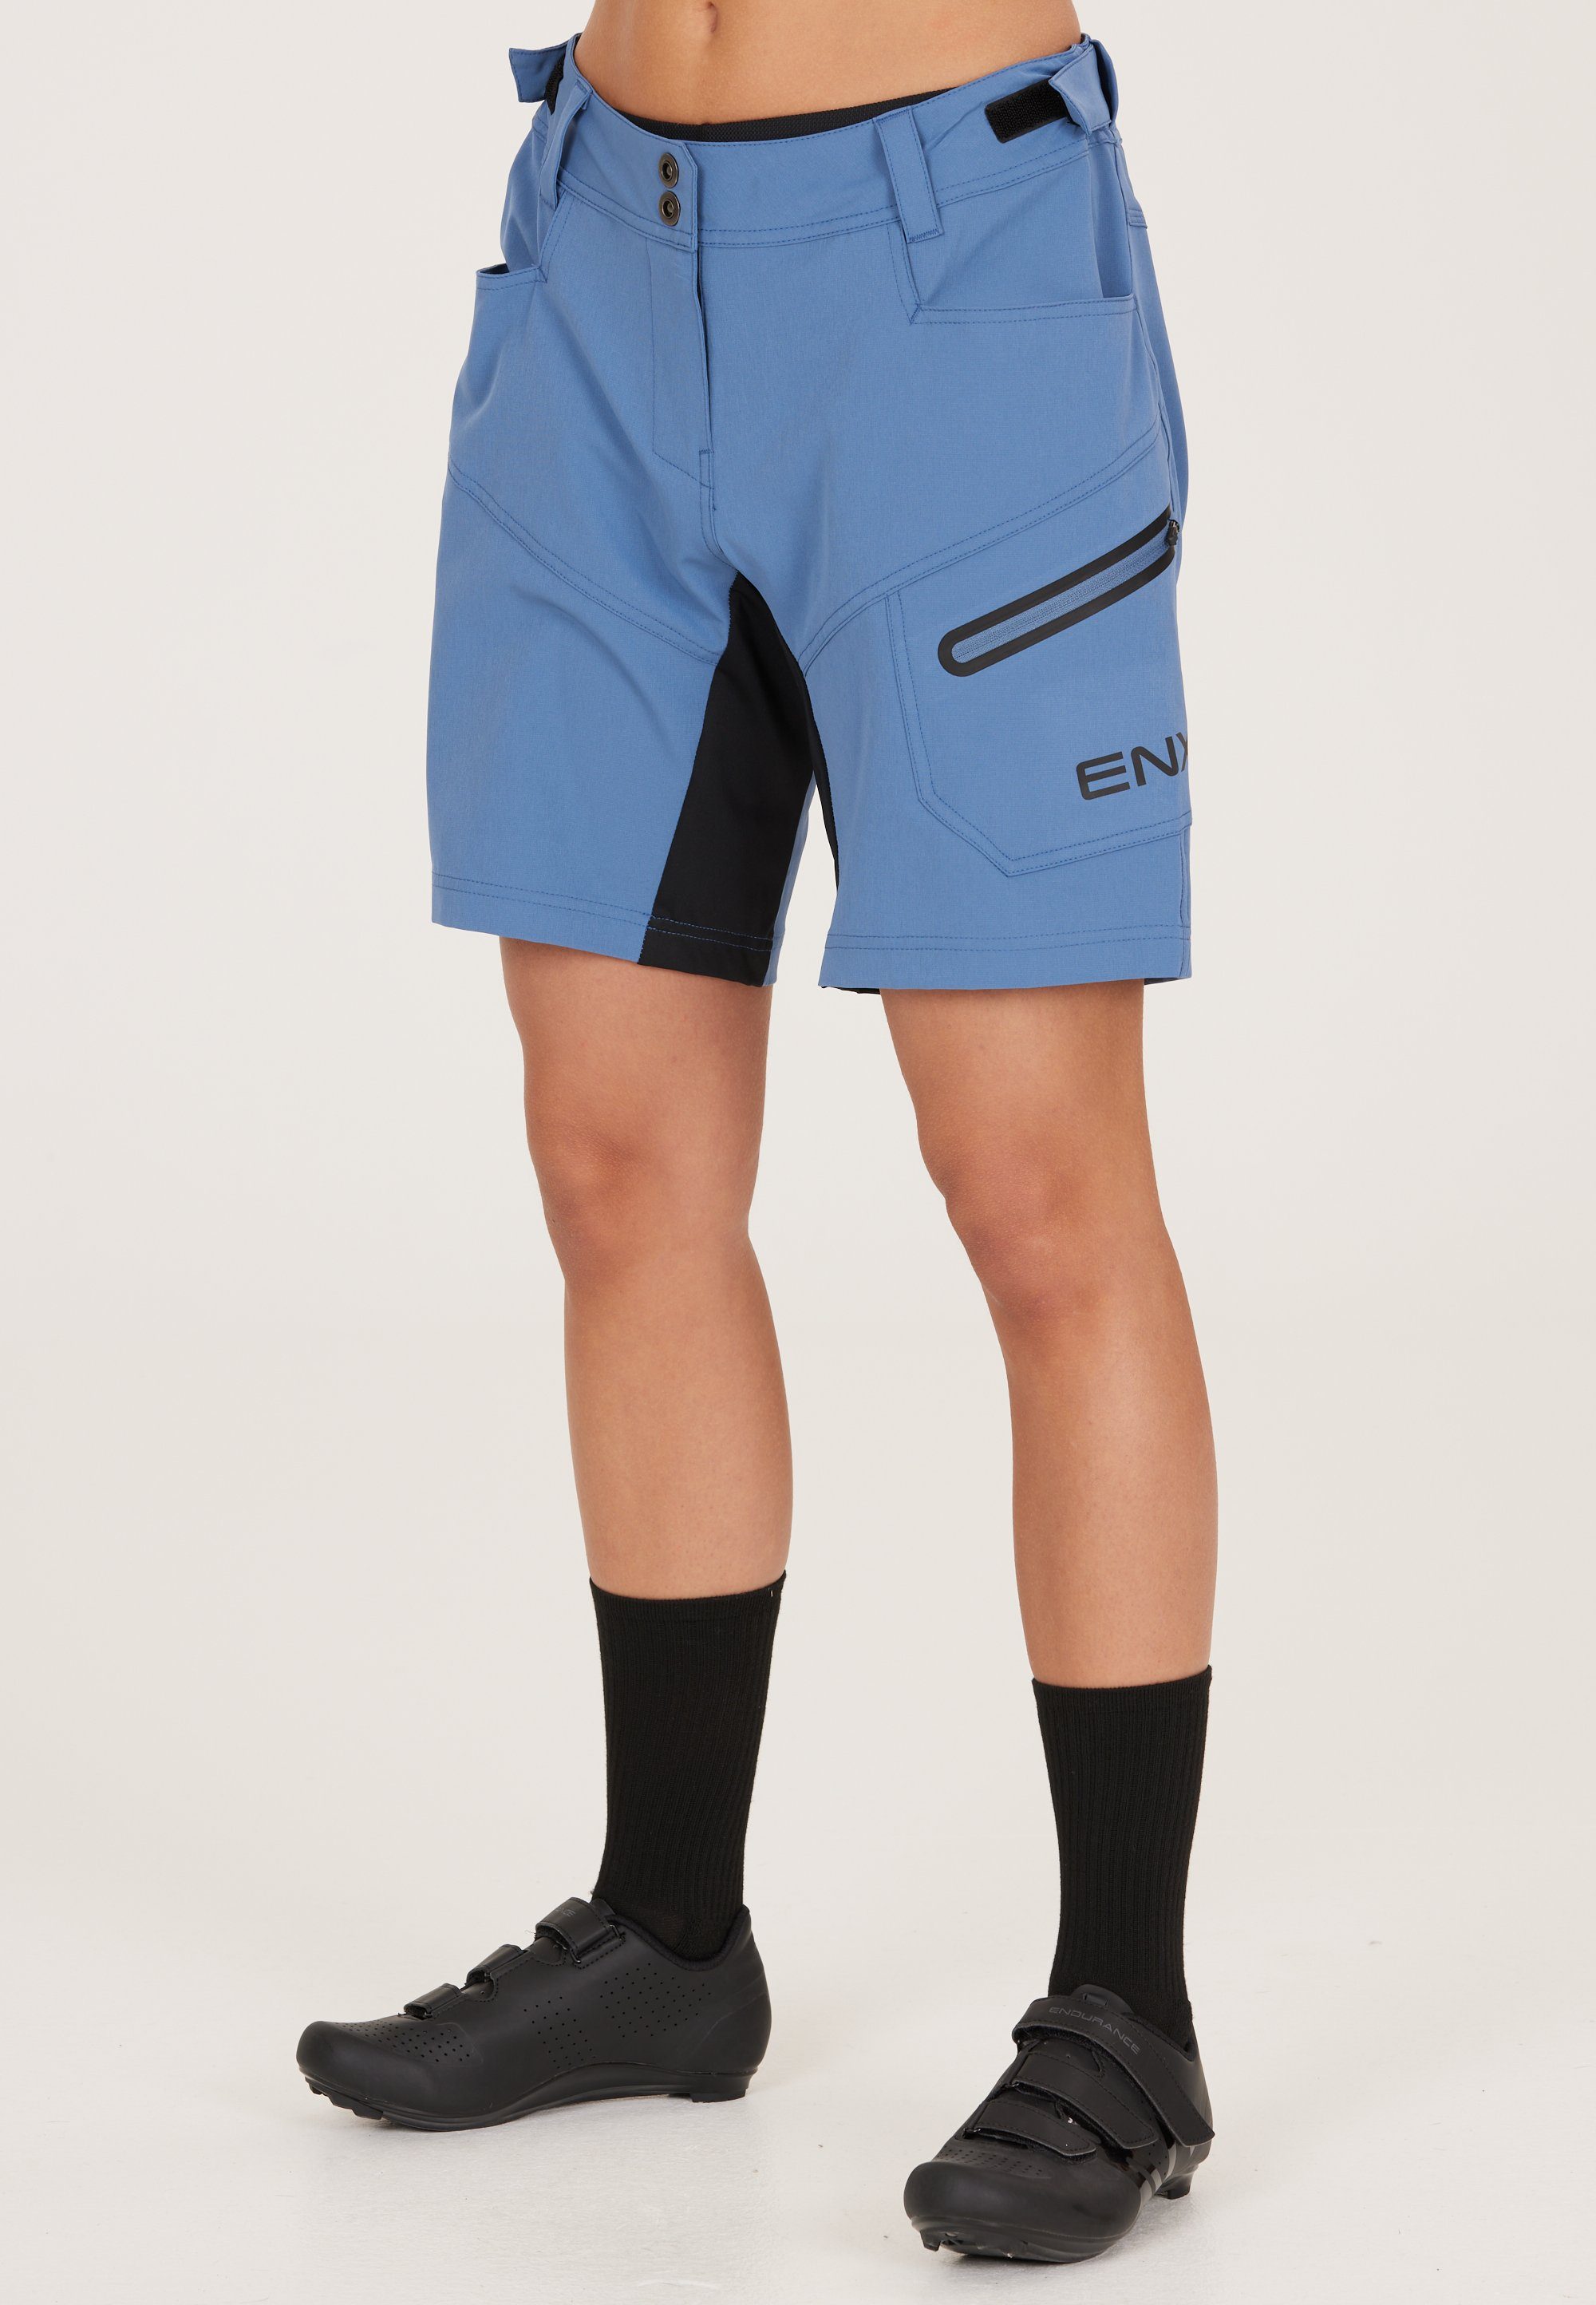 ENDURANCE Radhose 1 Shorts herausnehmbarer in 2 mit Innen-Tights W Jamilla blau